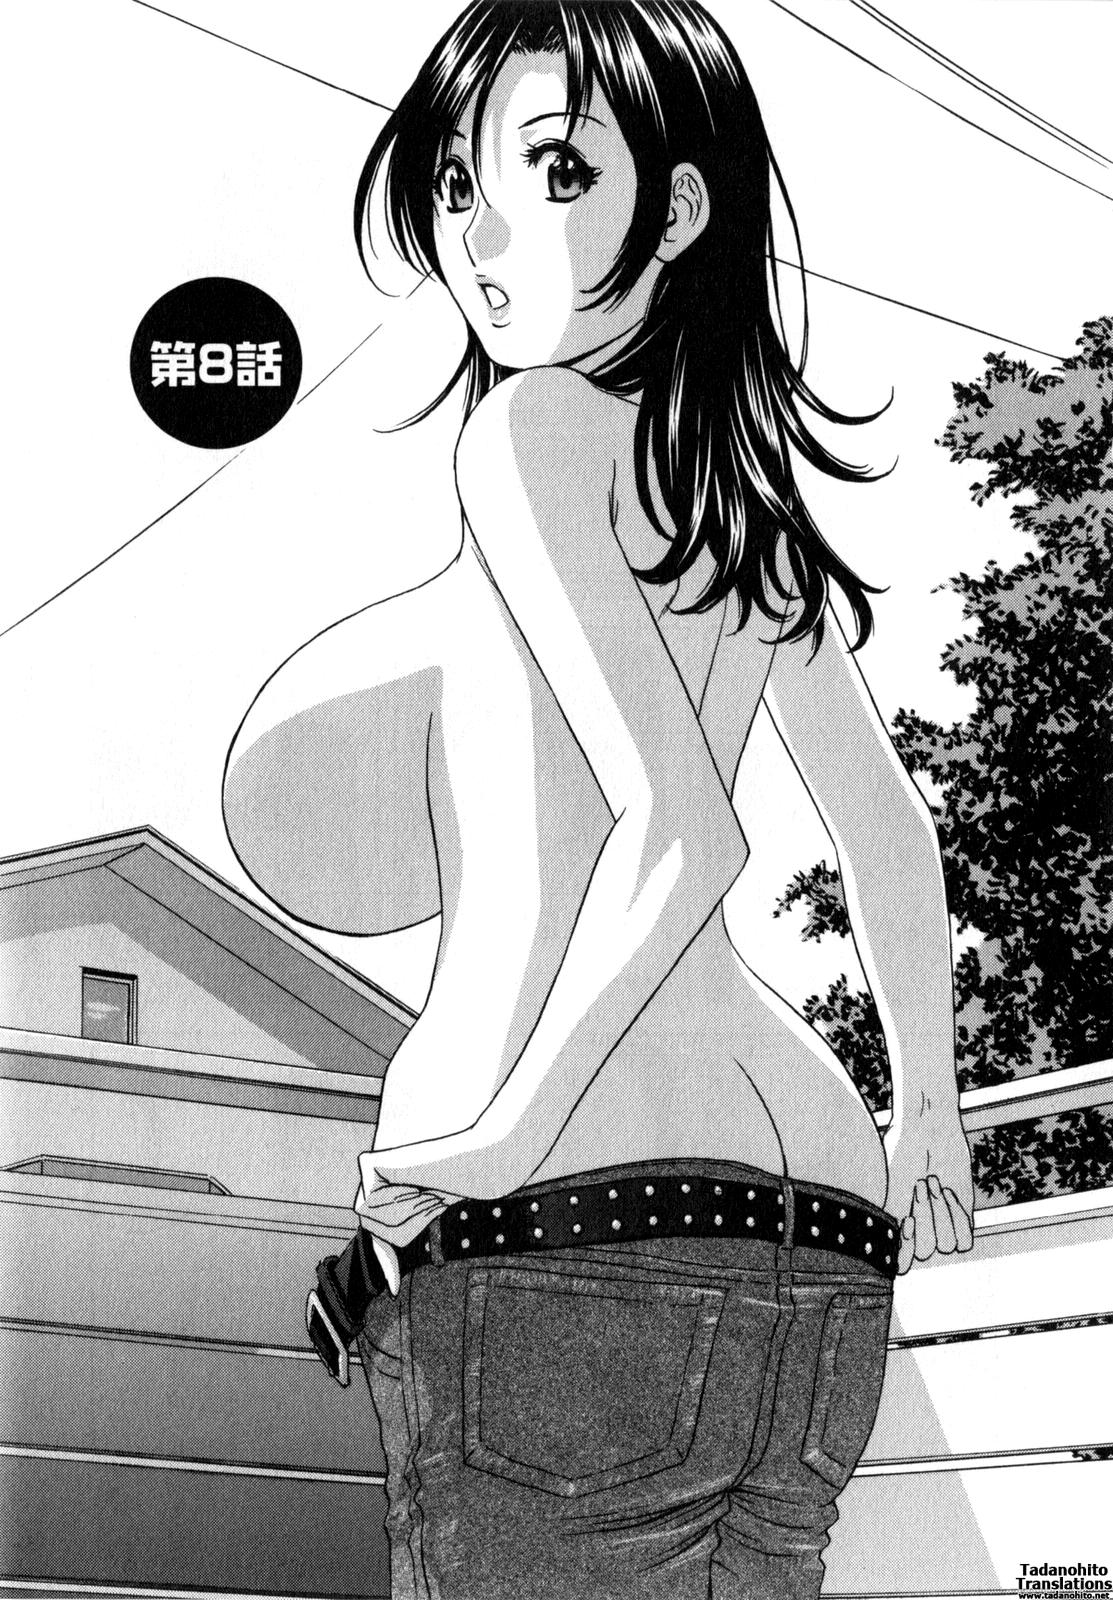 [Hidemaru] Life with Married Women Just Like a Manga 1 - Ch. 1-8 [English] {Tadanohito} 142